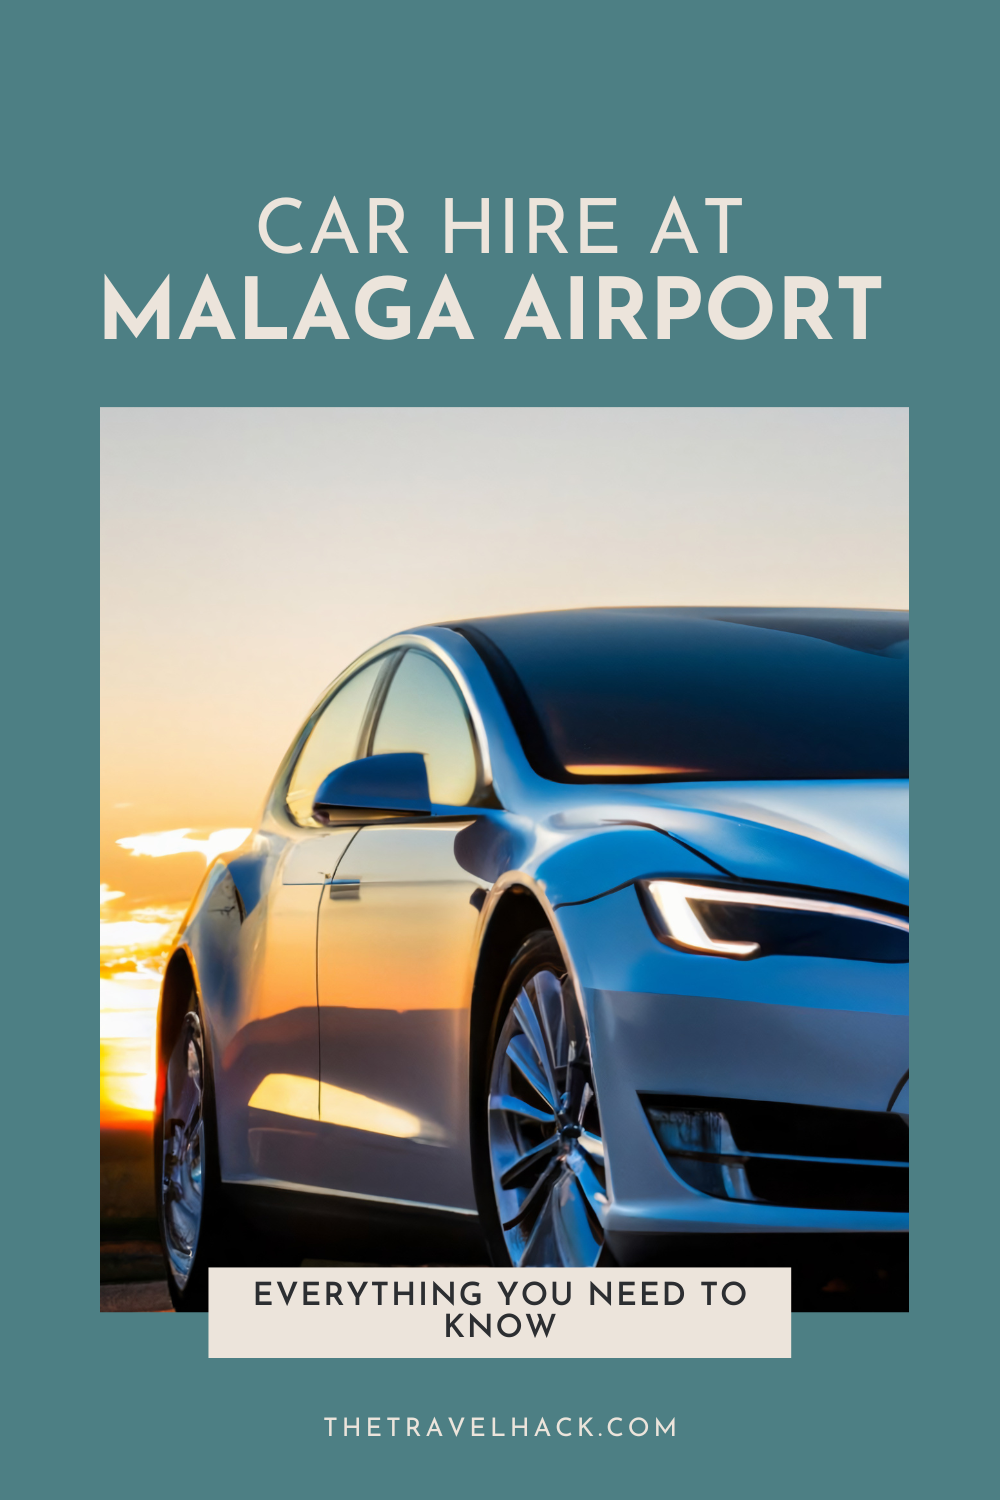 Car Hire at Malaga Airport: Convenient and Affordable Options